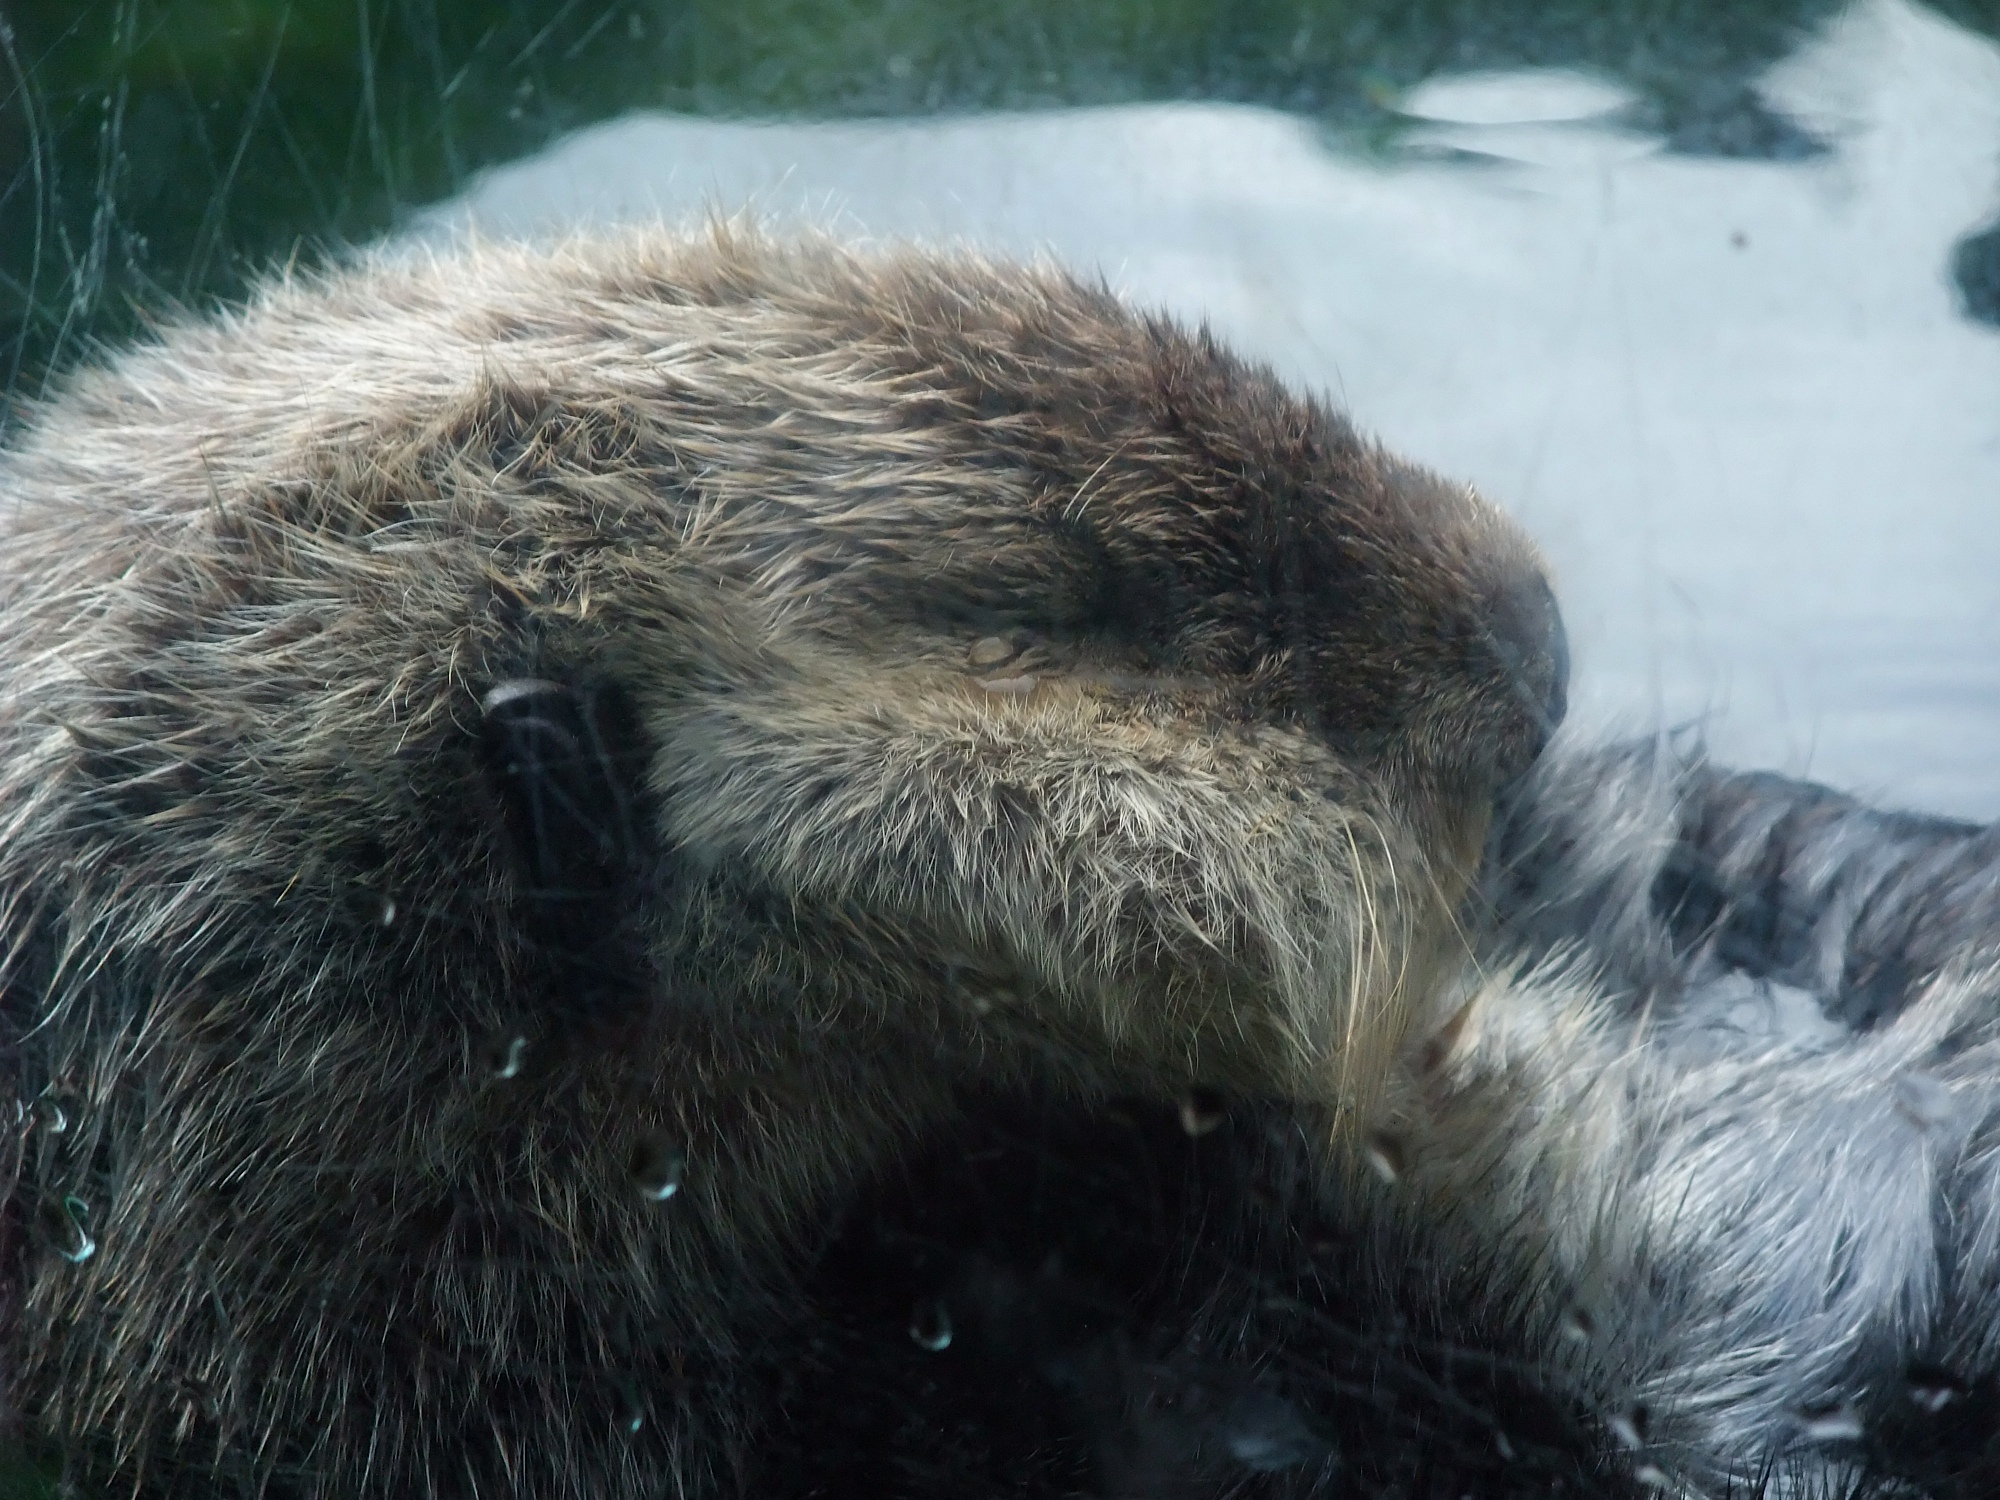 Closeup of Napping Sea Otter at the Vancouver Aquarium